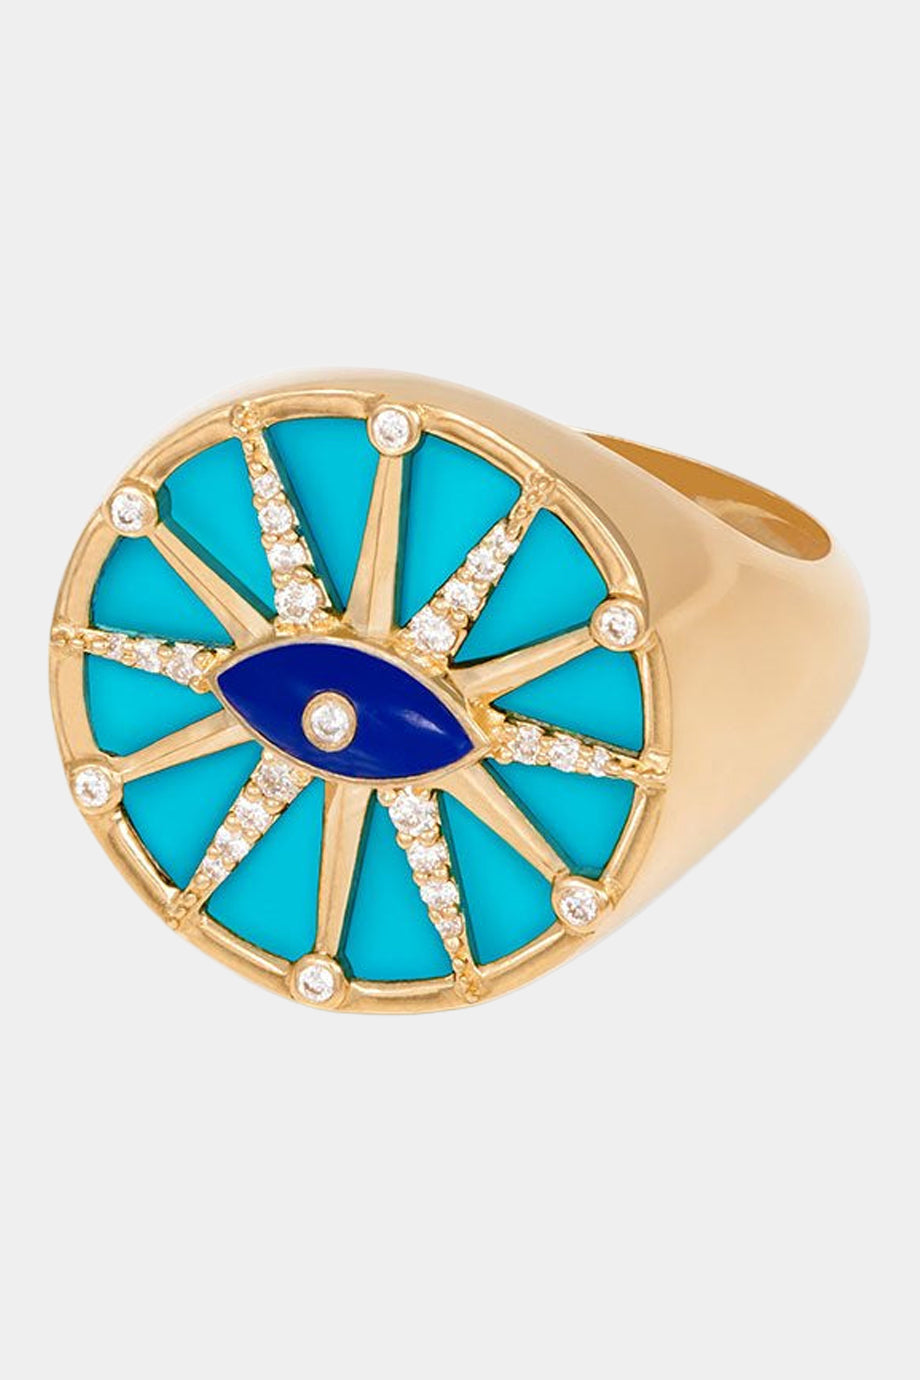 The O'Hara Eye Ring - Turquoise